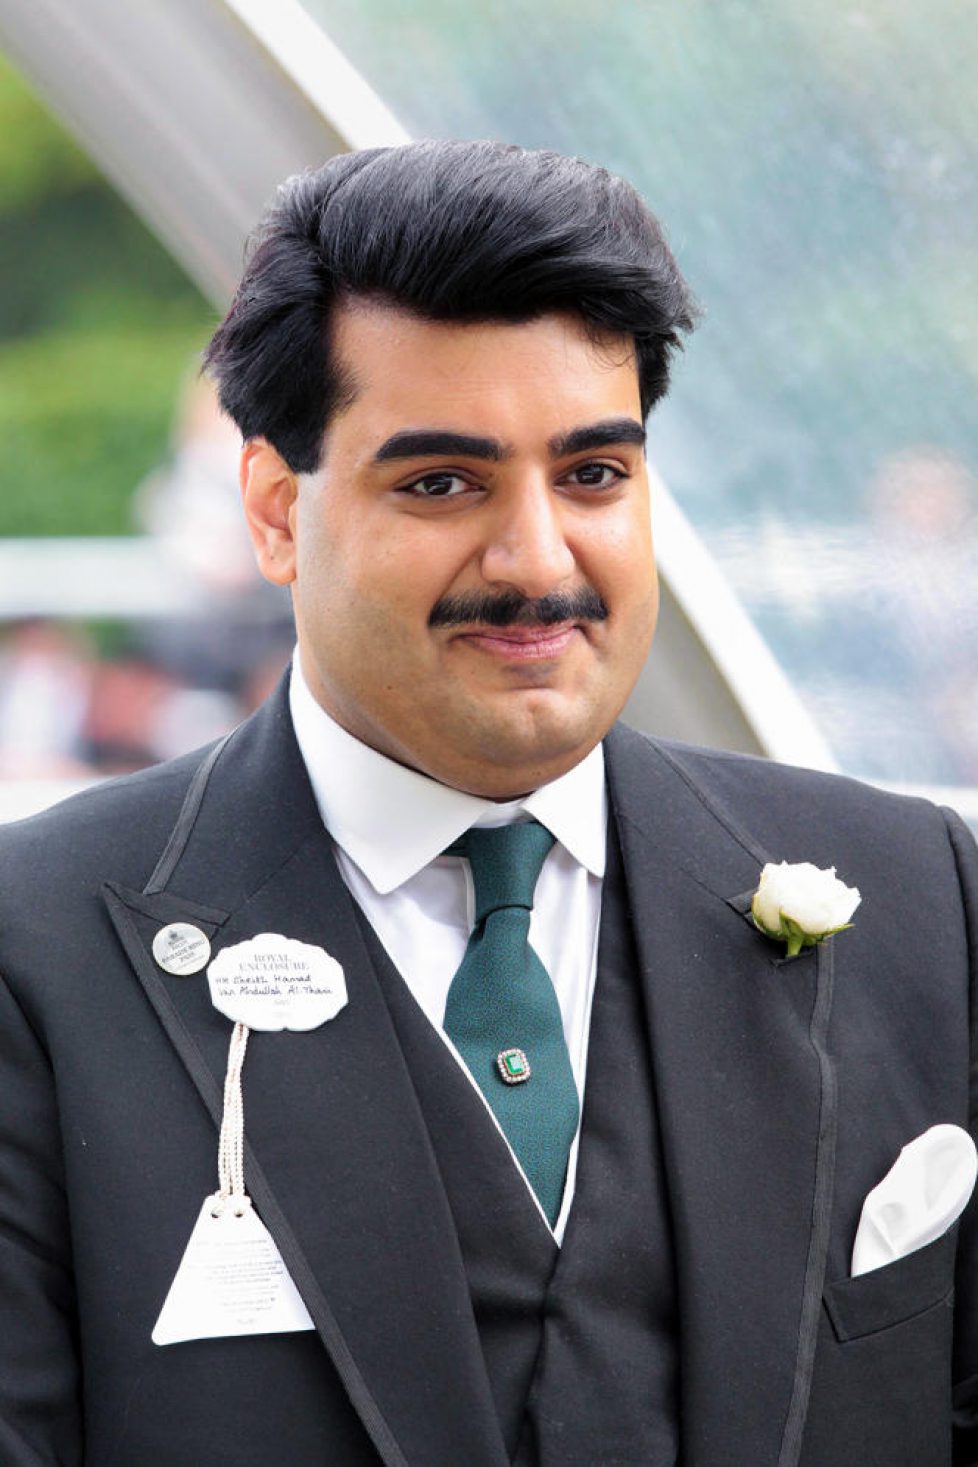 Ascot, United Kingdom, Sheikh Hamad bin Abdulla al Thani, owner of galloping race horses